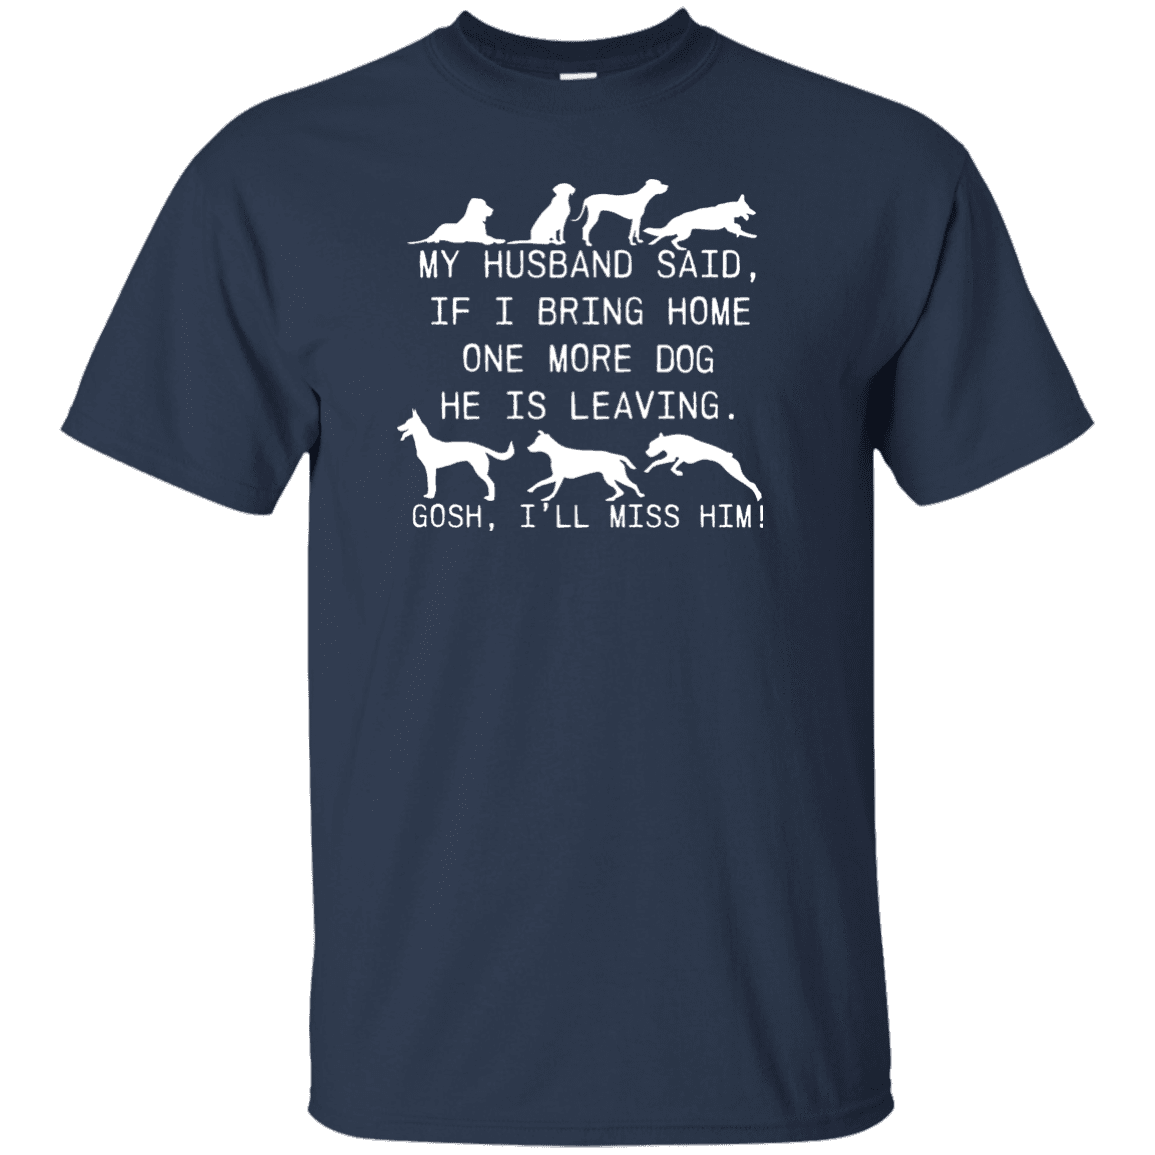 My Husband Said Dog - T Shirt.